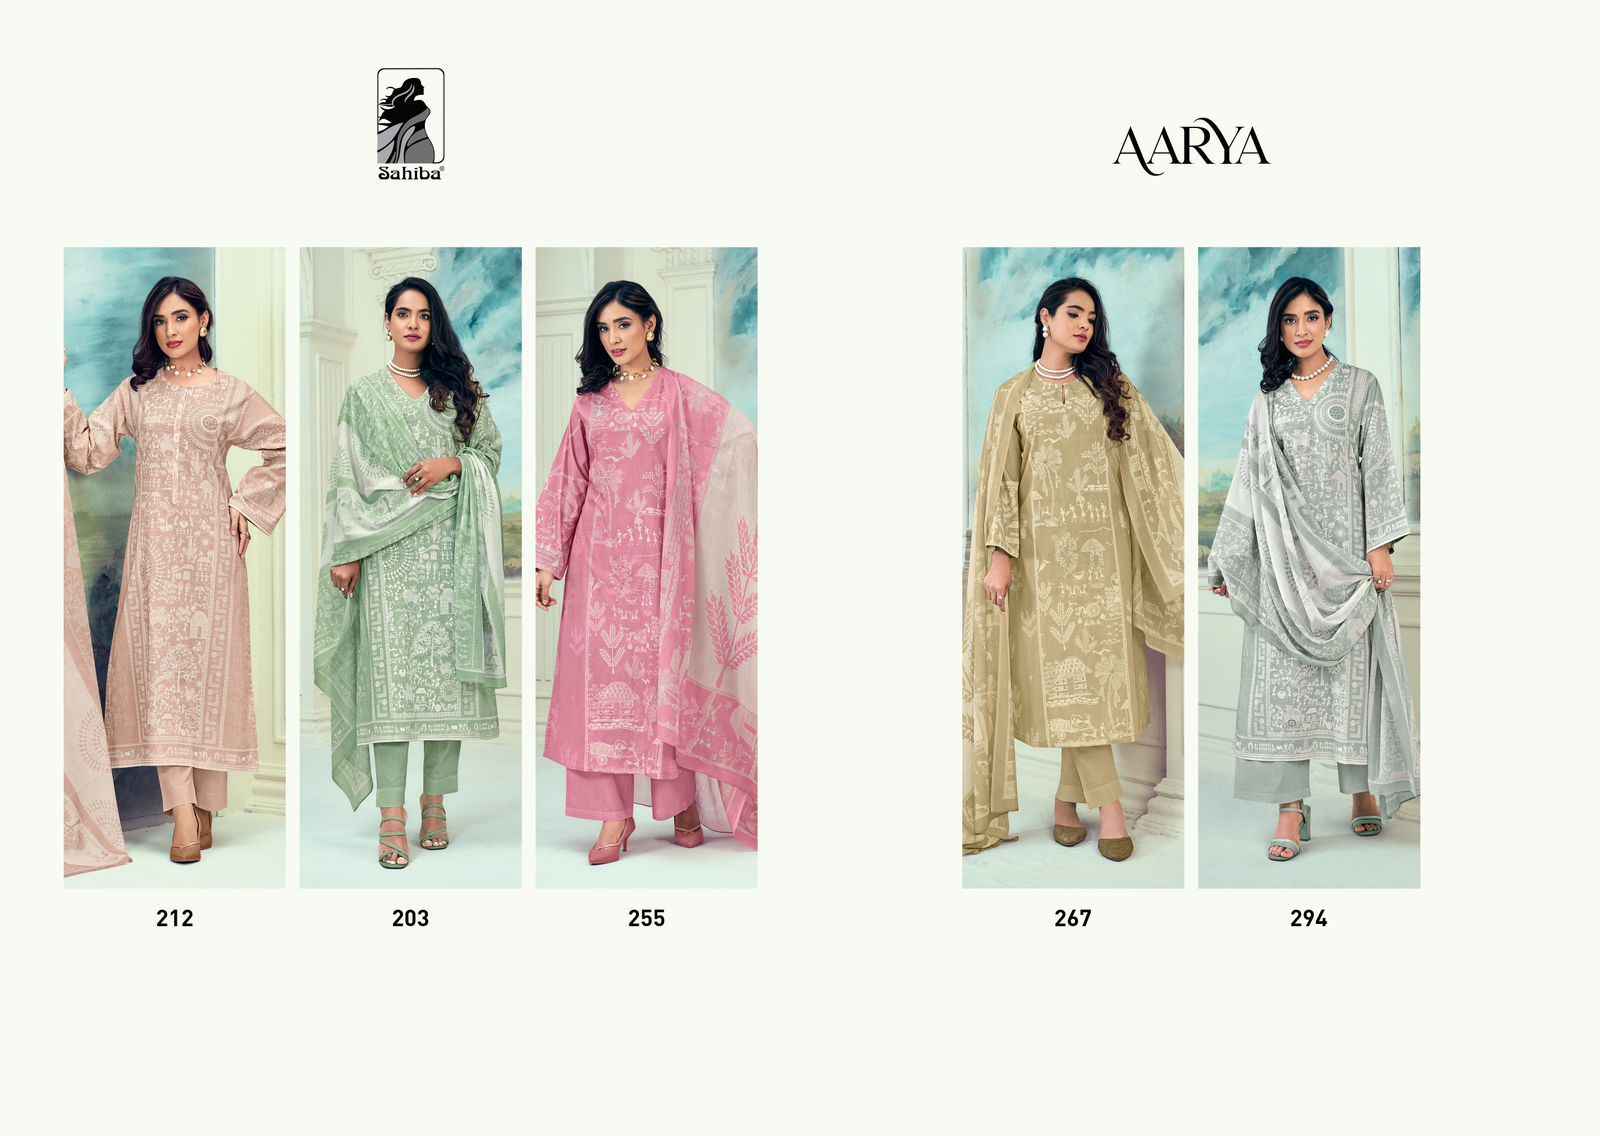 Sahiba Aarya  Pure Cotton Lawn Print Dress Material (5 Pc Catalog)